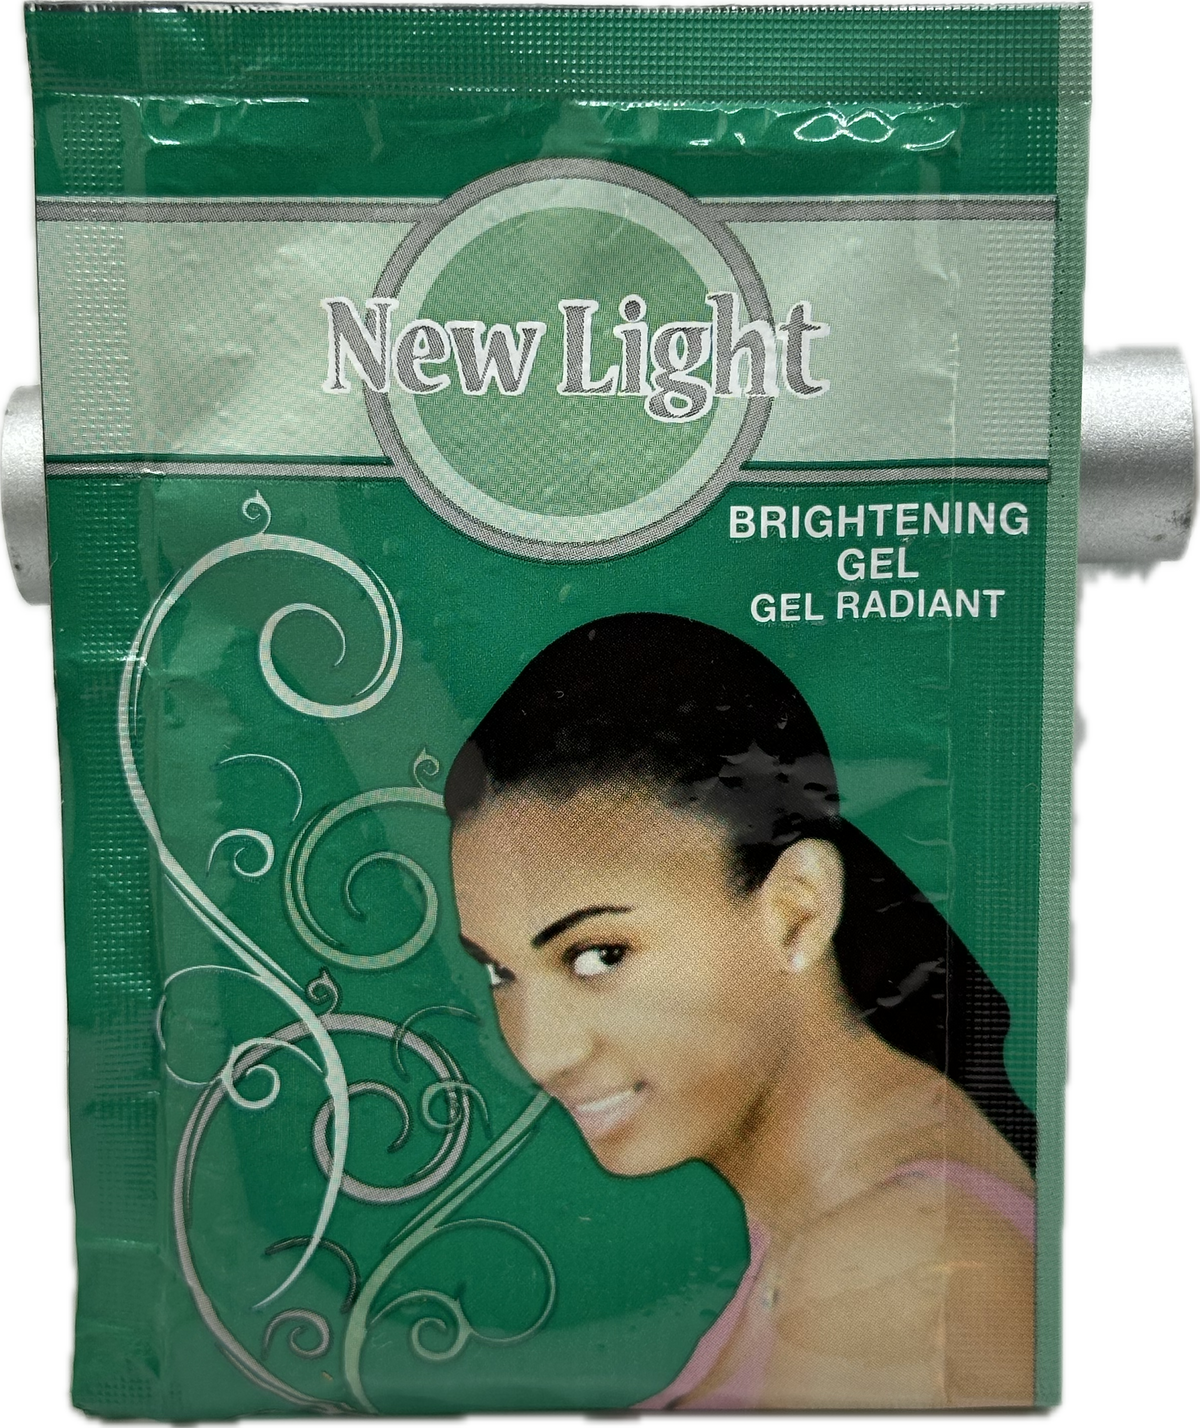 New light gel